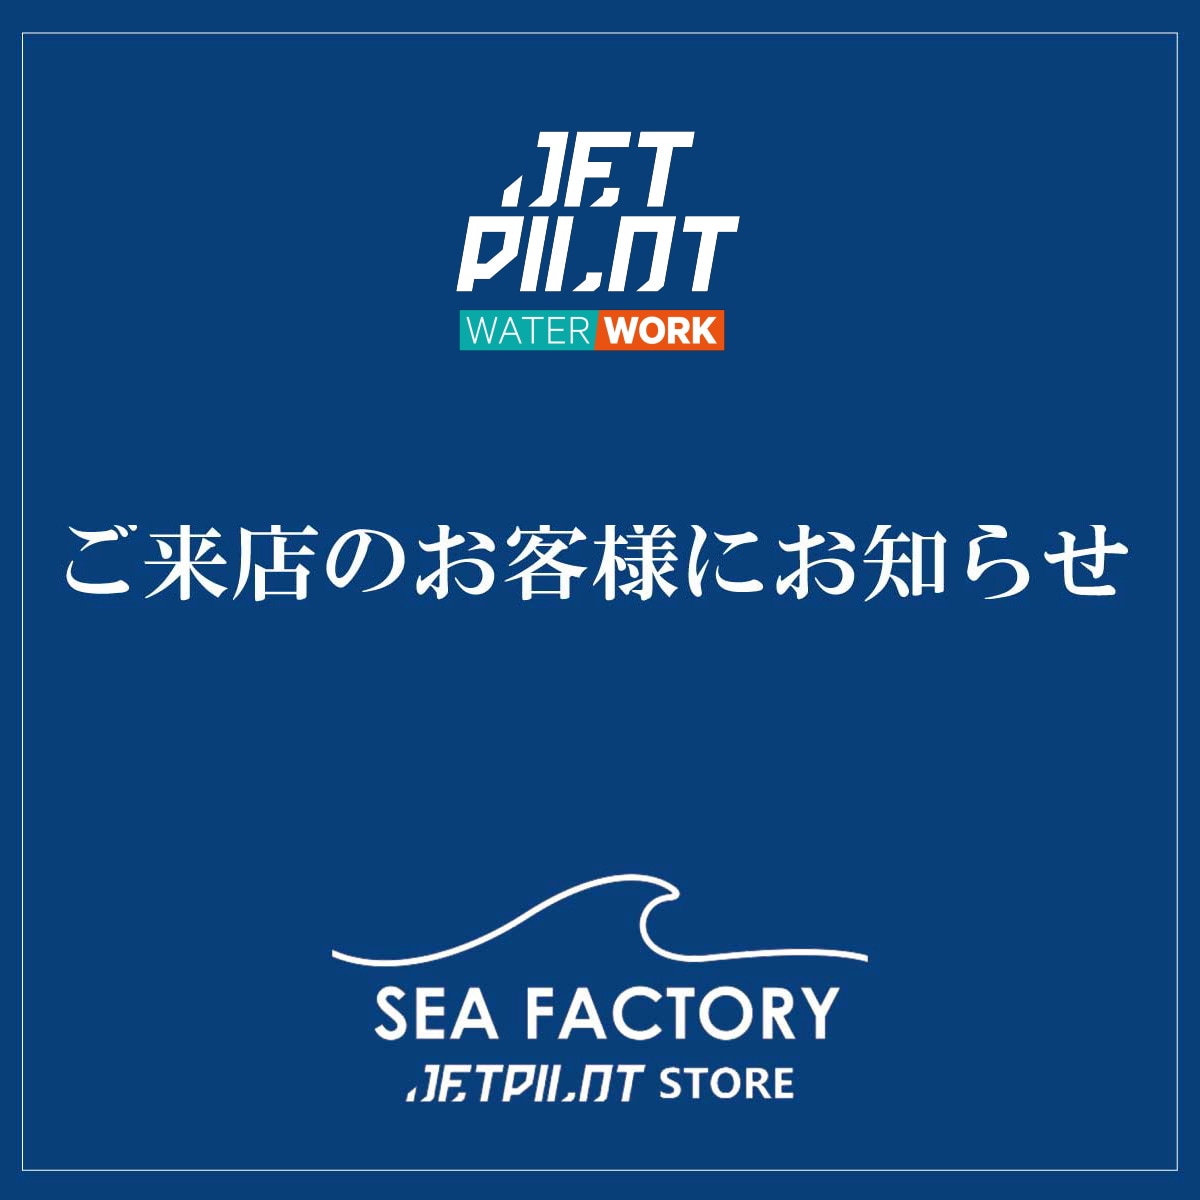 gigaplus.makeshop.jp/seafactory/TOP%E3%82%B9%E3%83